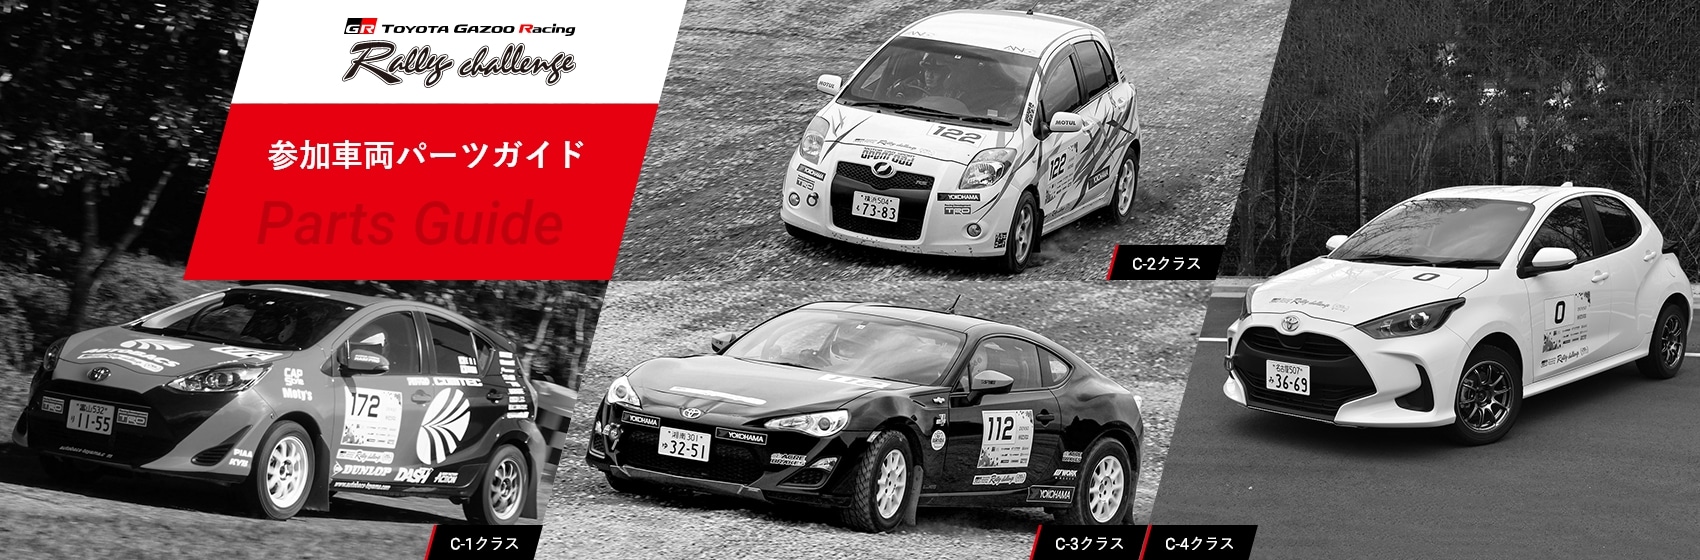 TOYOTA GAZOO Racing Rally challenge 参加車両パーツガイド Parts Guide